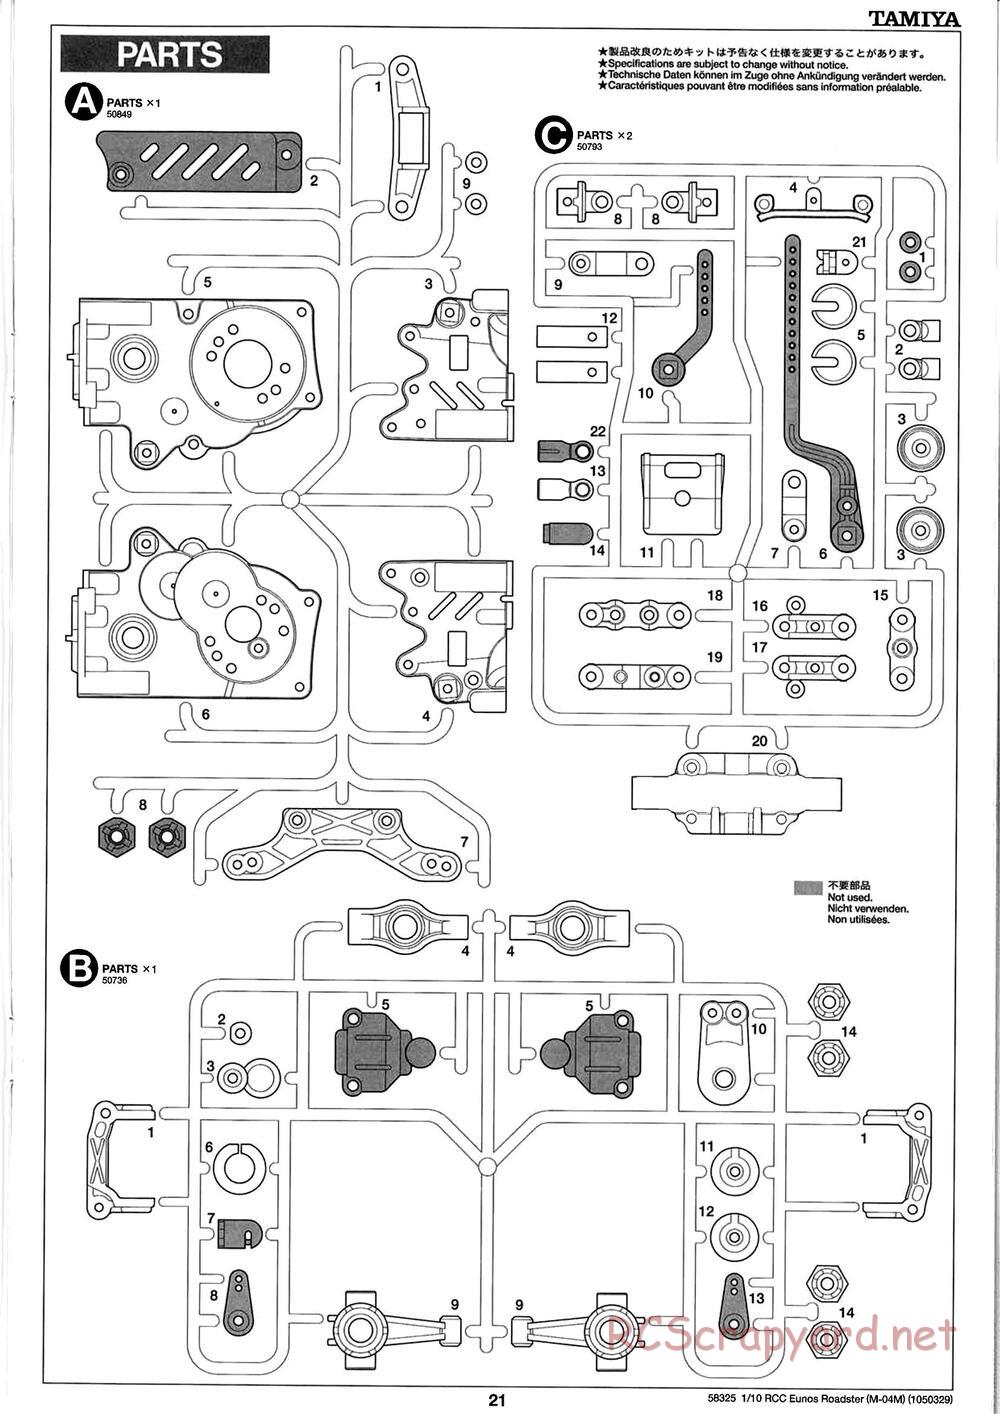 Tamiya - Eunos Roadster - M04M Chassis - Manual - Page 21